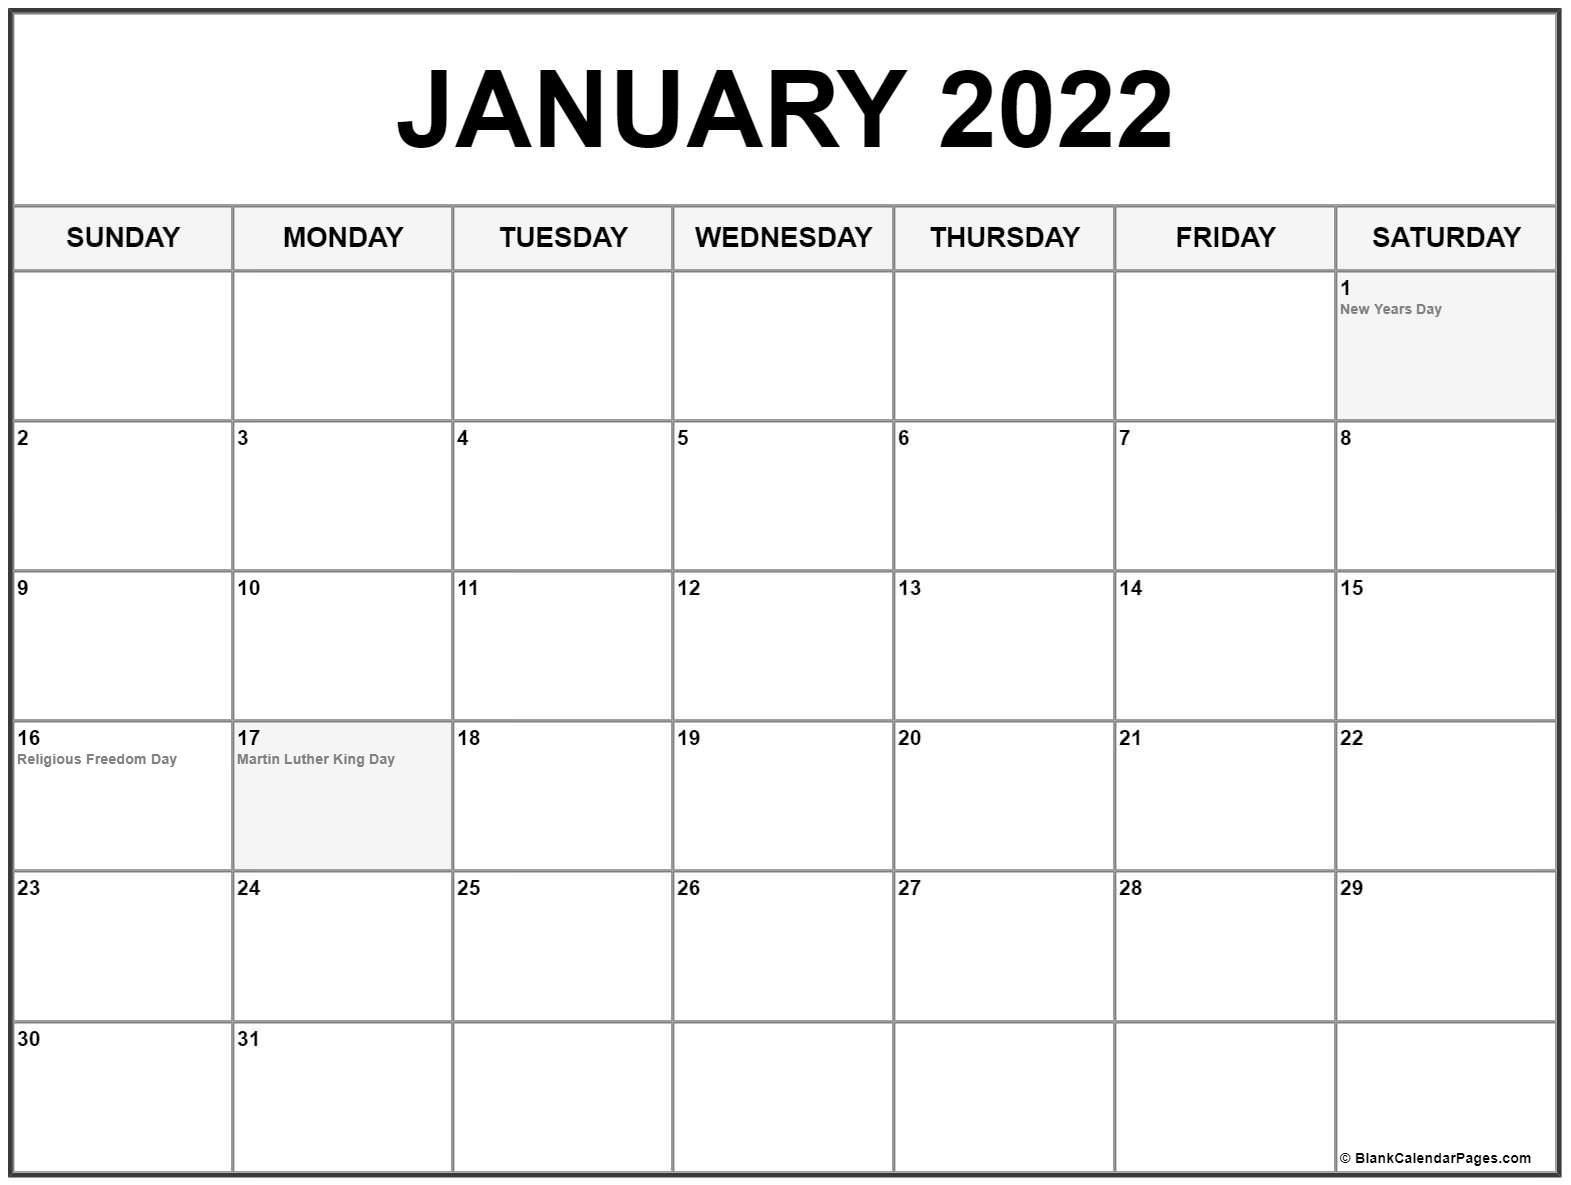 Pick National Day Calendar February 2022